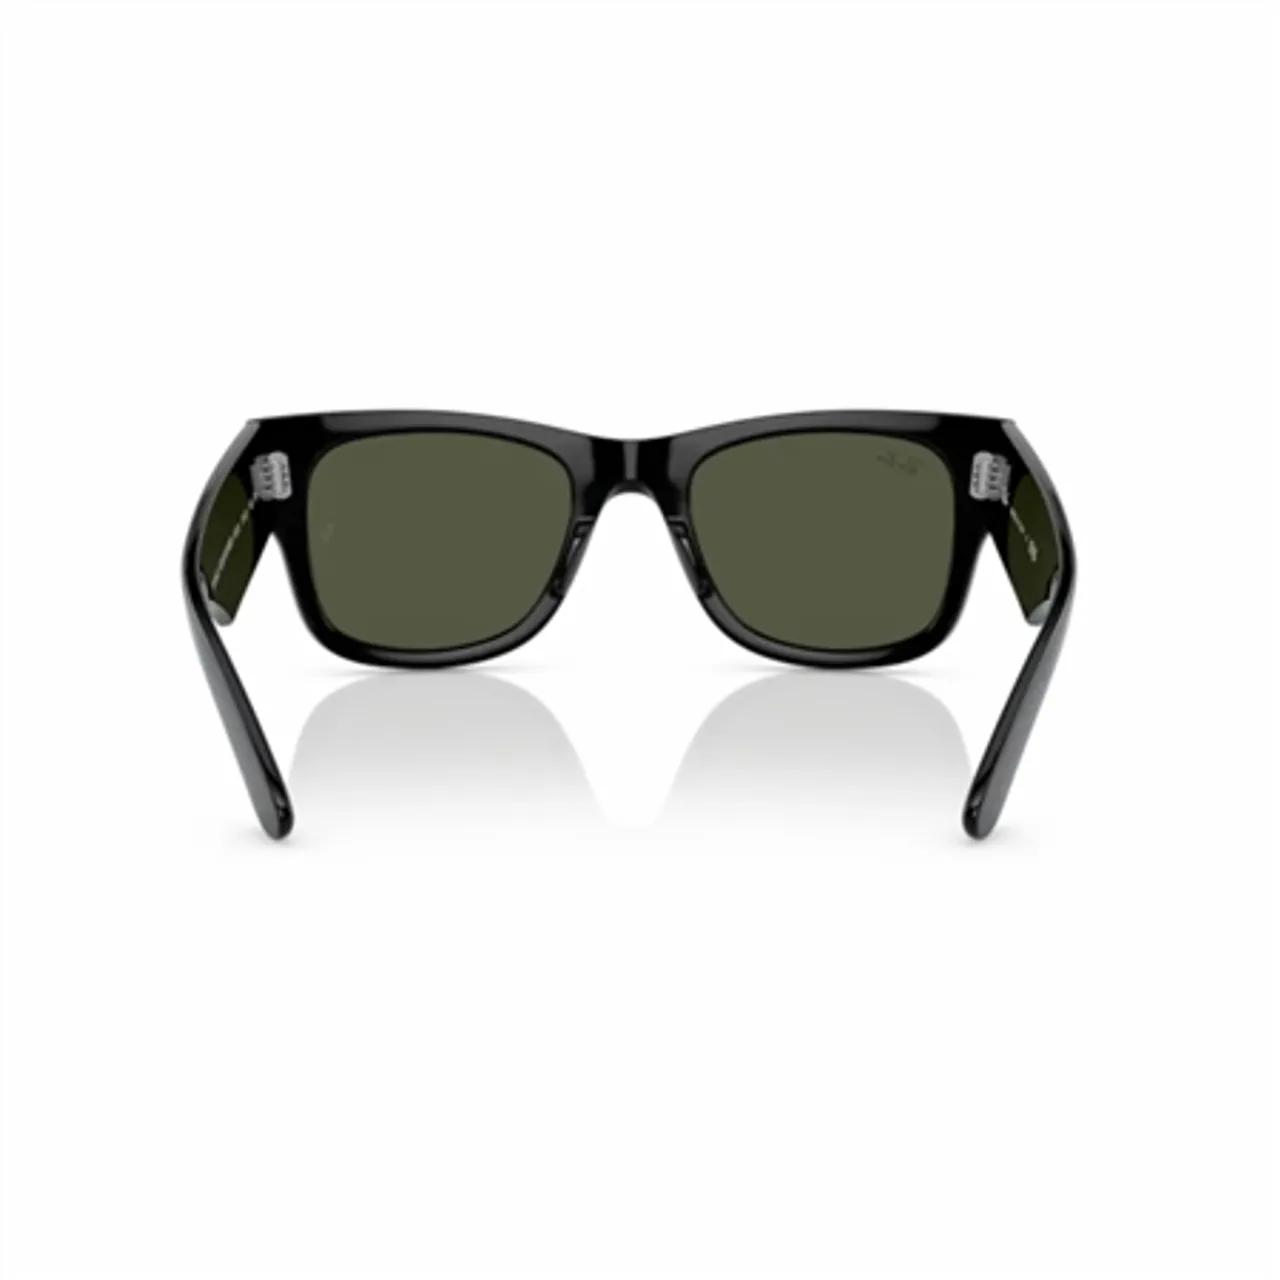 Ray-Ban Mega Wayfarer Sunglasses - Polished Black & Green